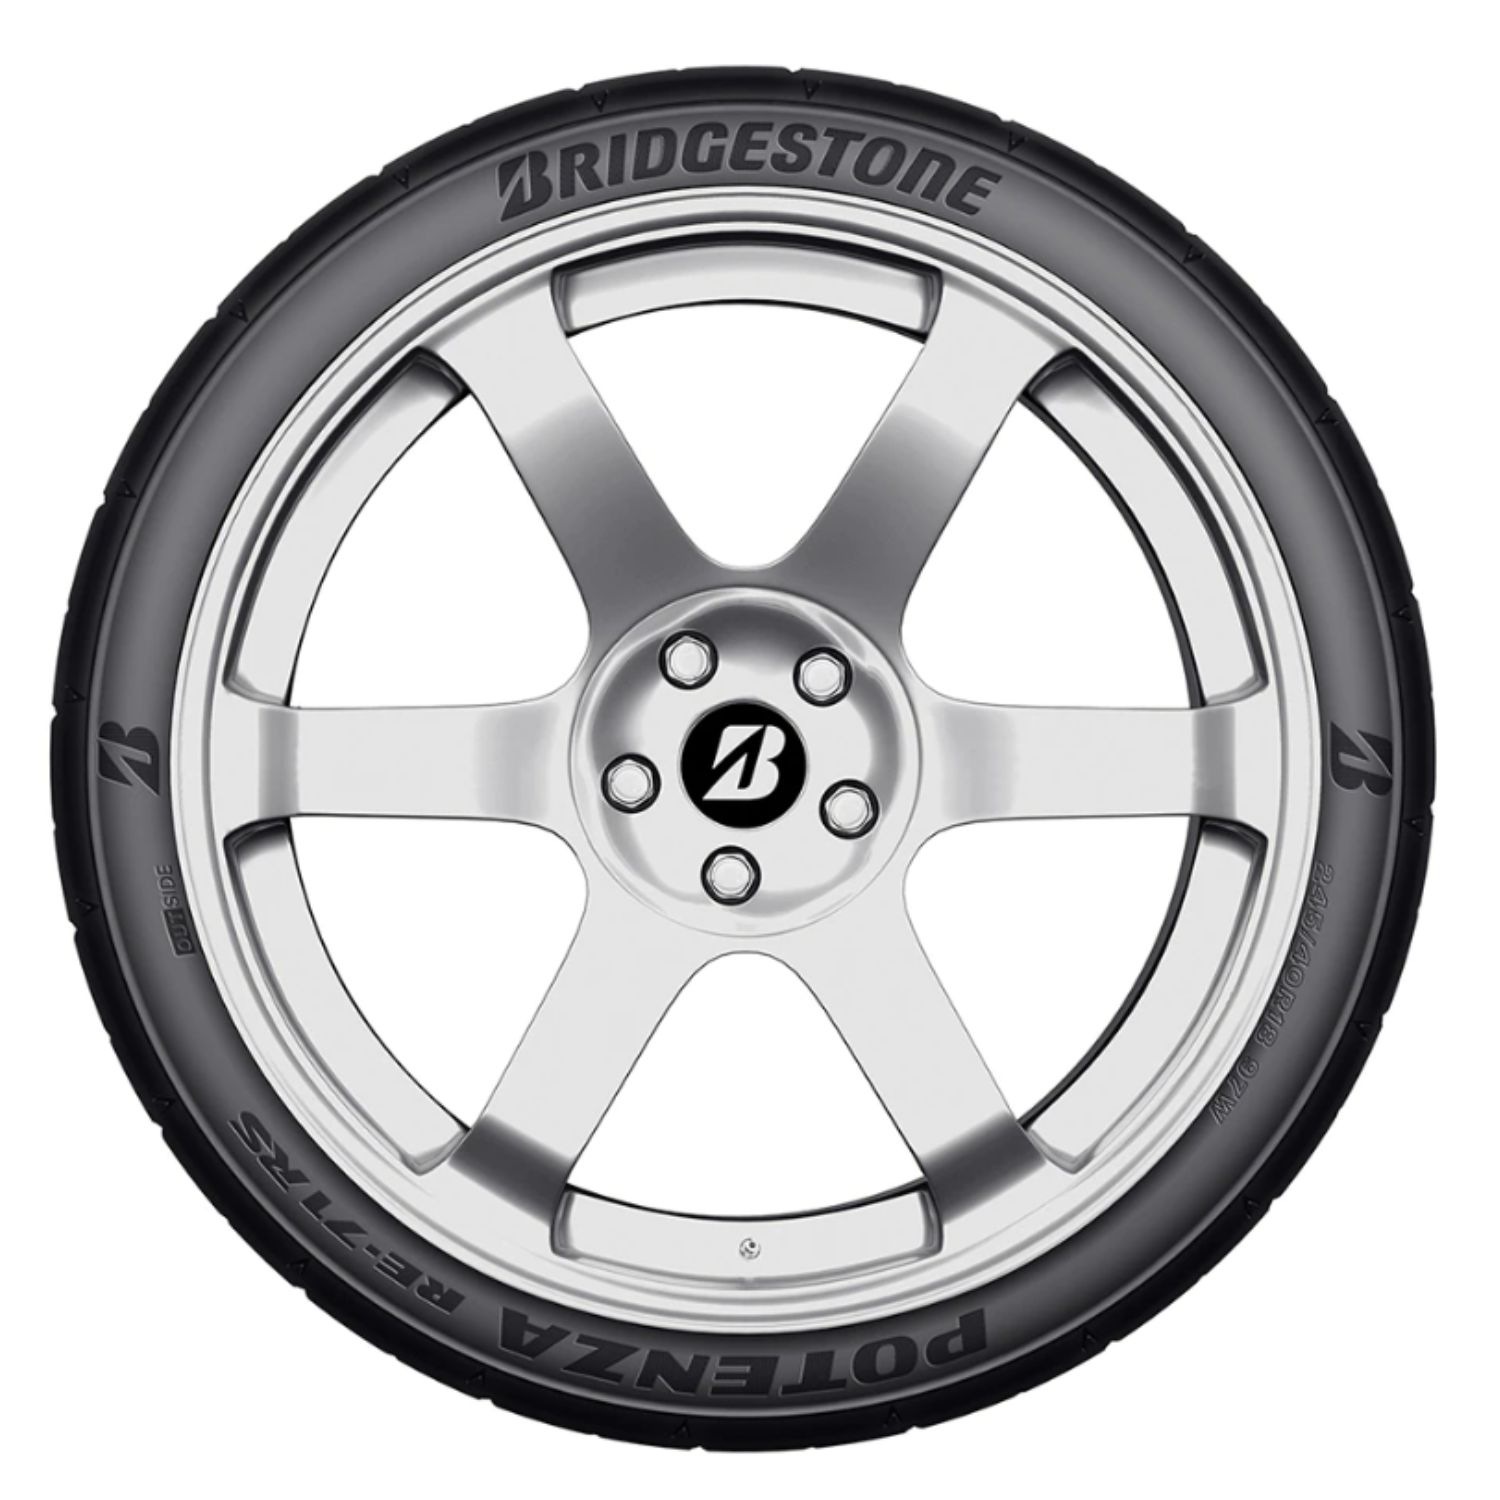 Bridgestone Potenza RE 71RS Summer 275/35R18 95W Passenger Tire 